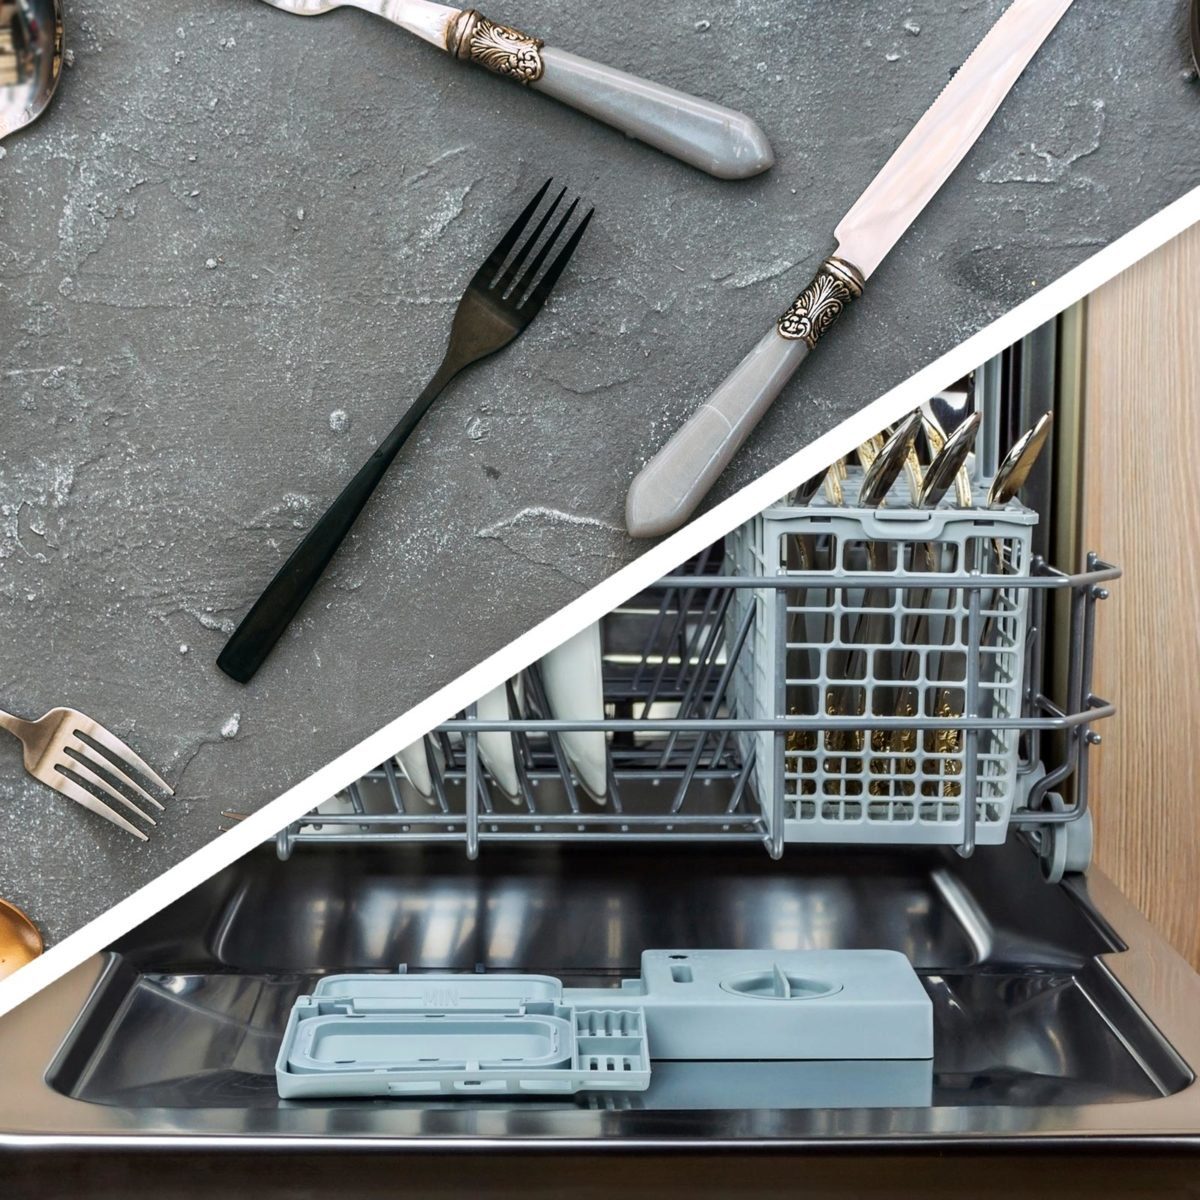 Silverware and dishwasher